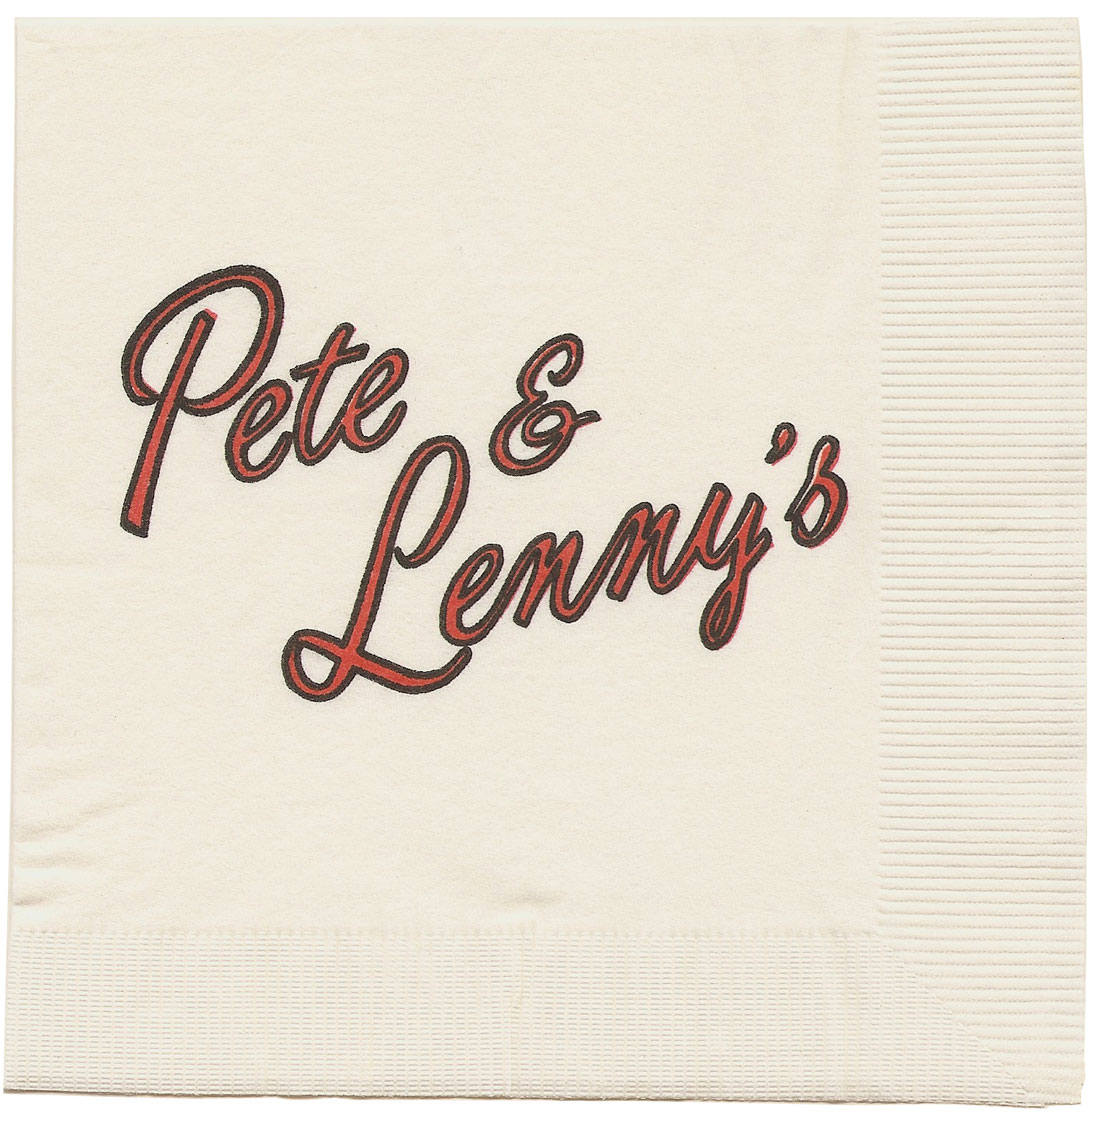 Pete & Lenny's napkin